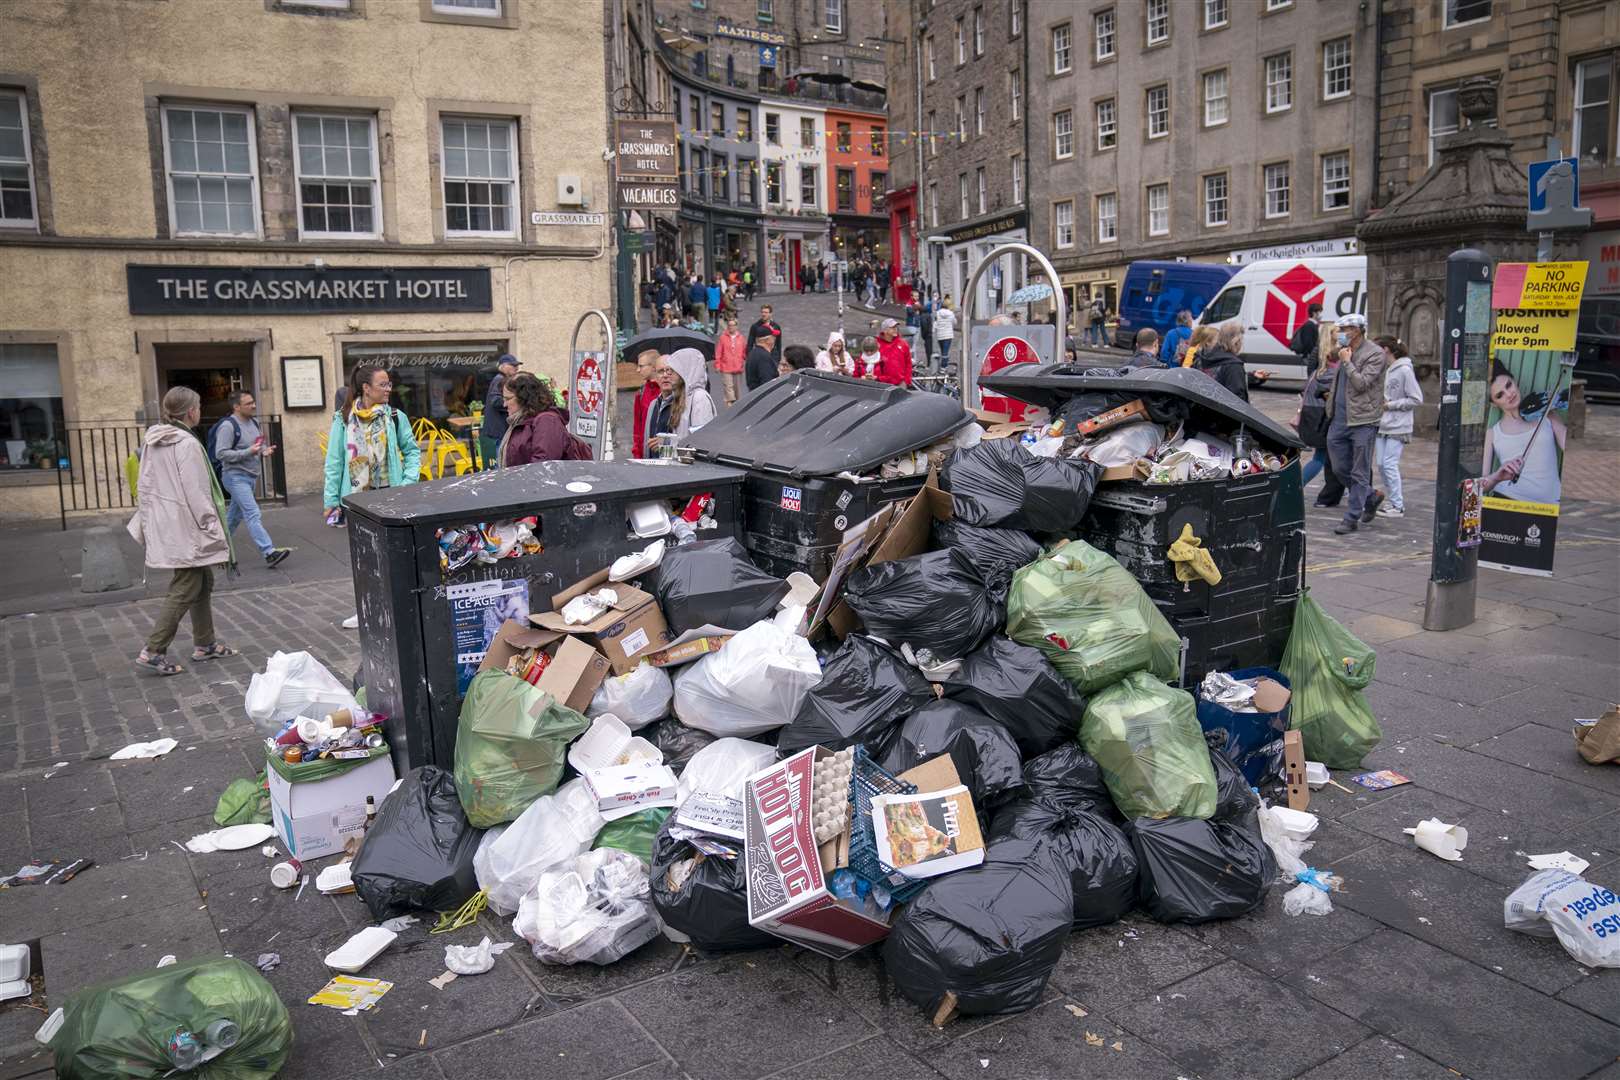 Bins and litter in the Grassmarket in Edinburgh city centre. (Jane Barlow/PA)